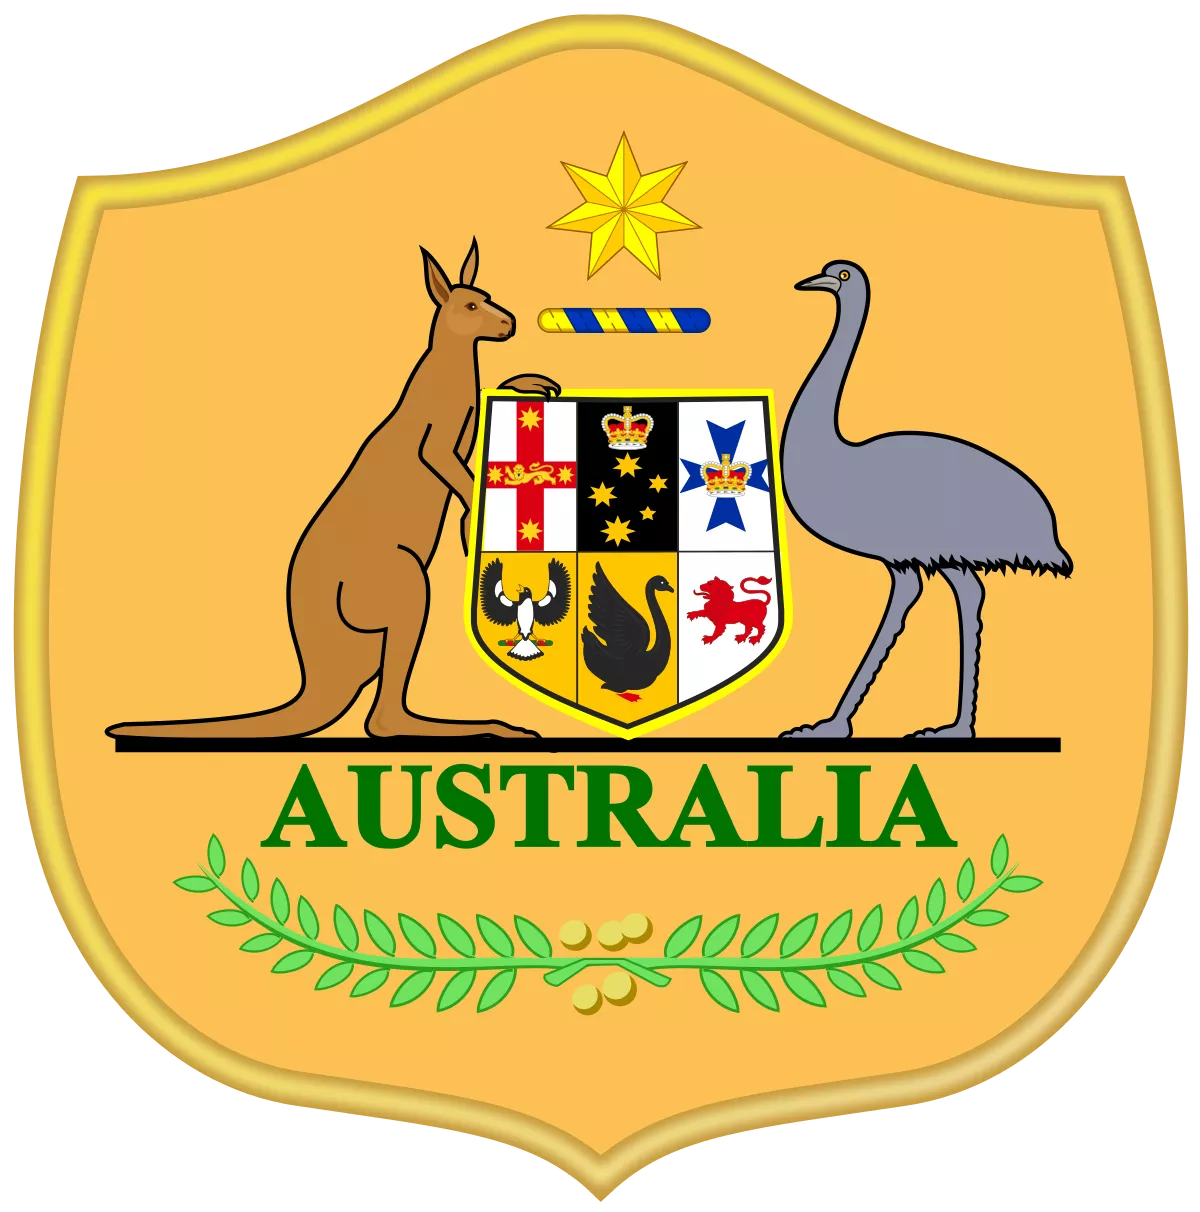 Australia - thejerseys